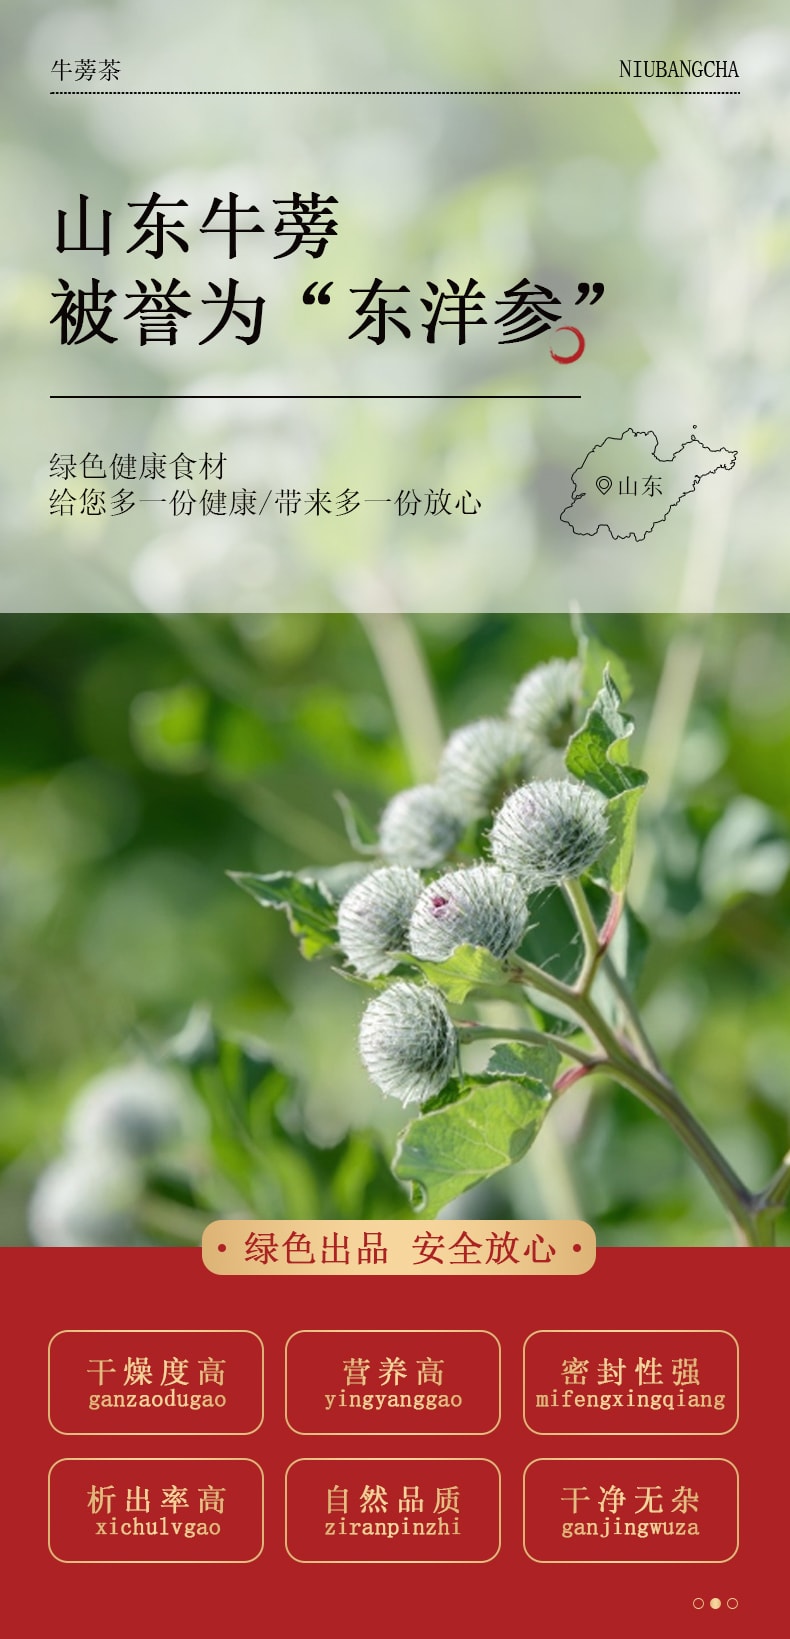 Beijing Tong Ren Tang Dried Burdock Root for Make Tea or Cook 170g